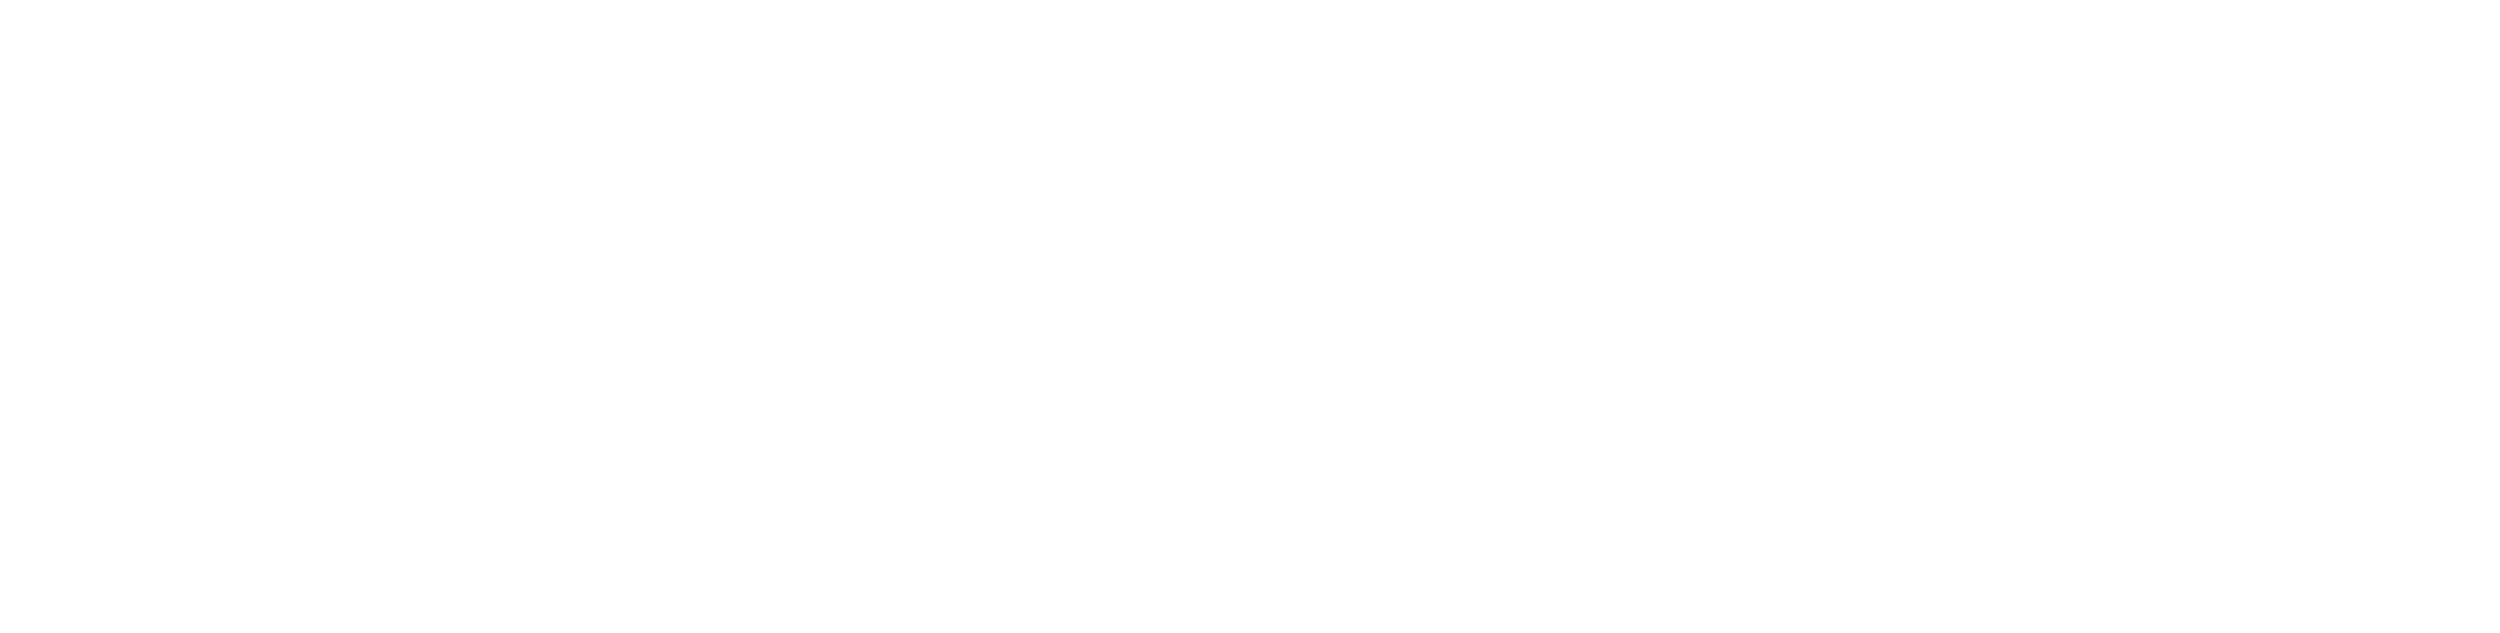 Genus customer BW offshore logo